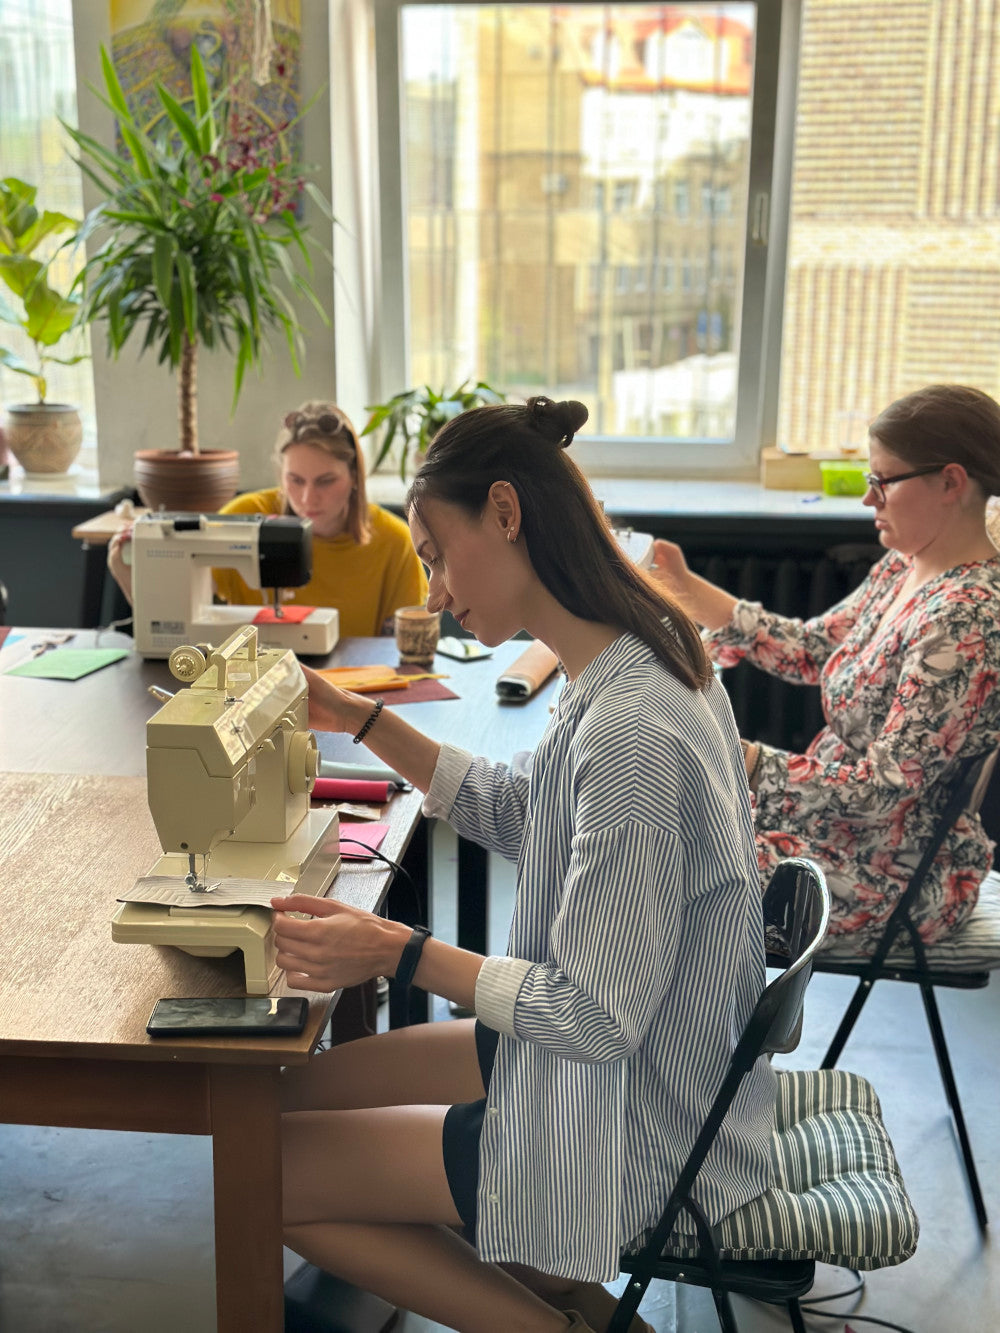 Workshop - Learn how to sew (21/05  Copenhagen)